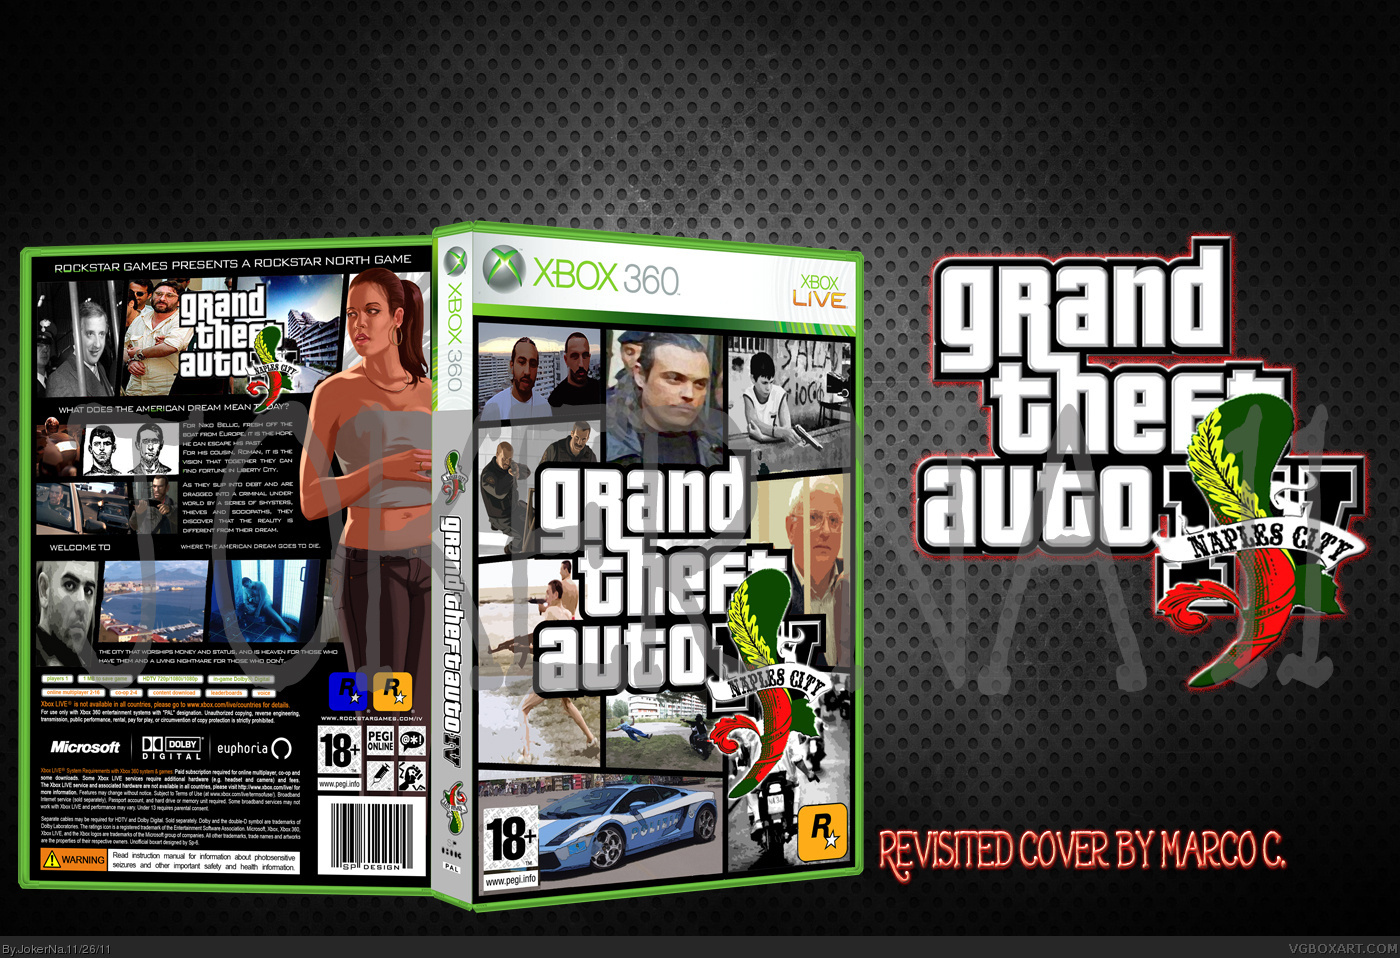 Grand Theft Auto: Naples City (ITA) box cover